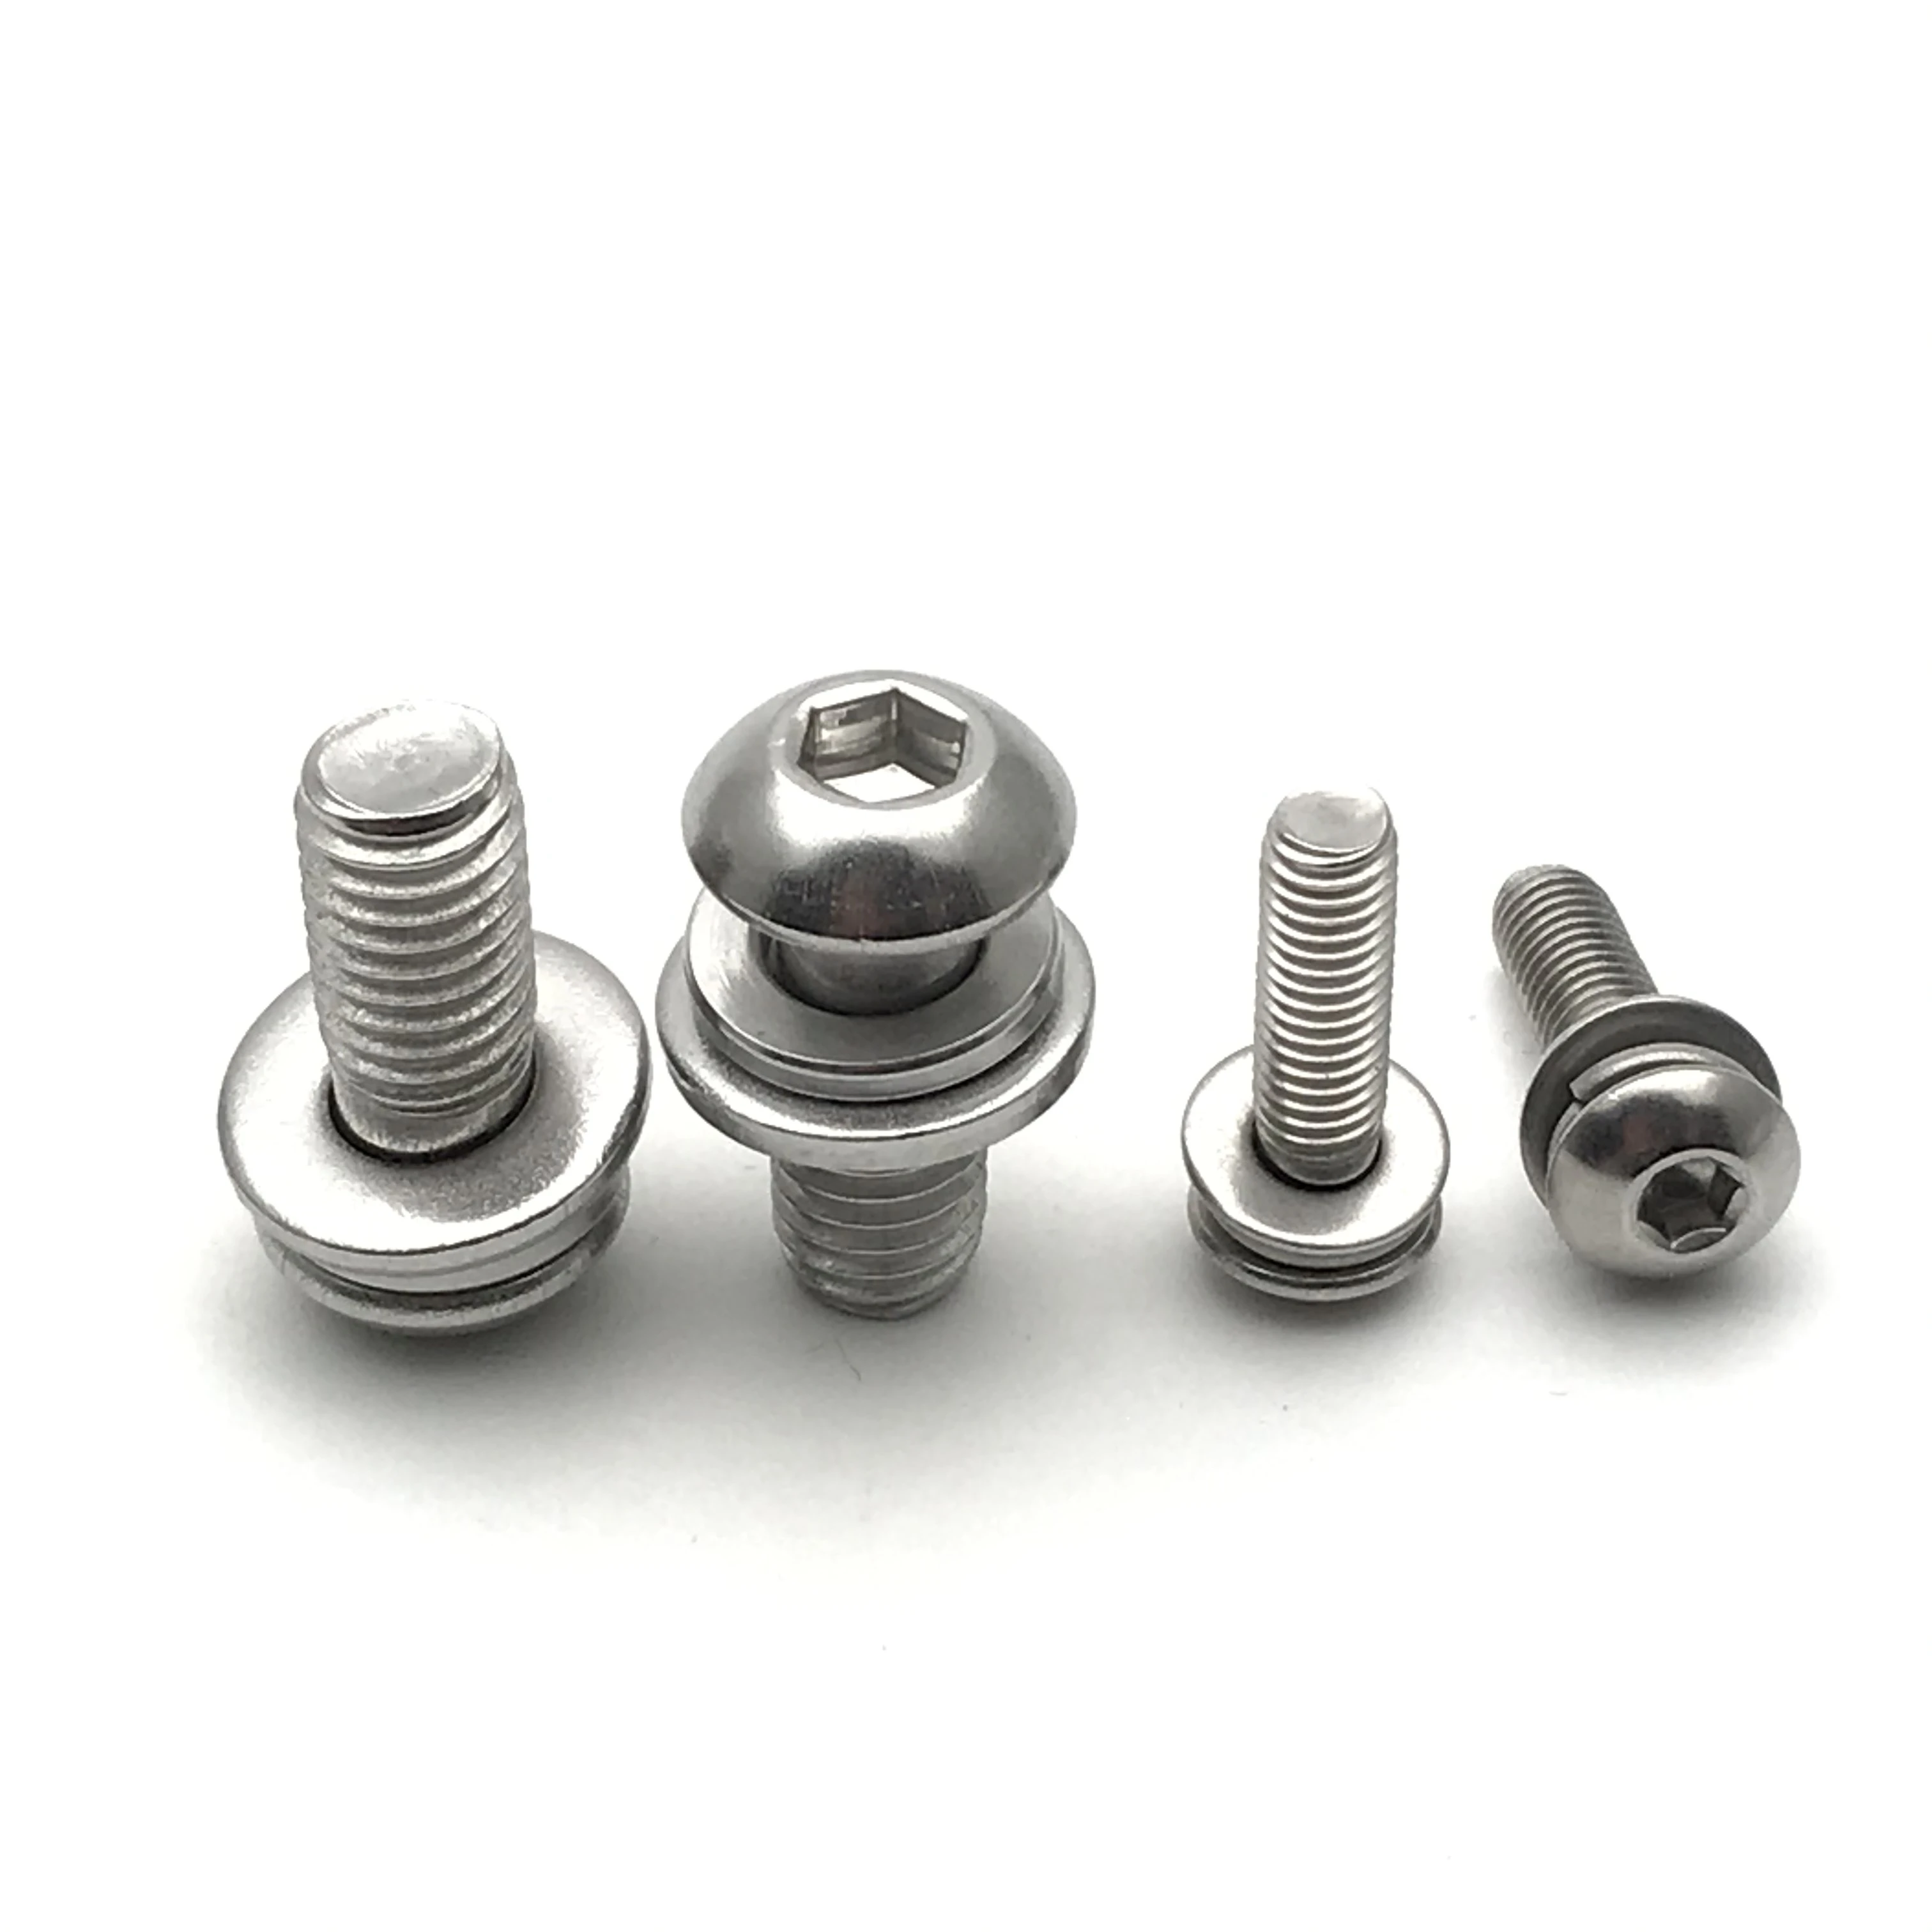 SS304 hexagon socket button head screw with flat washer spring washer button head socket cap screws